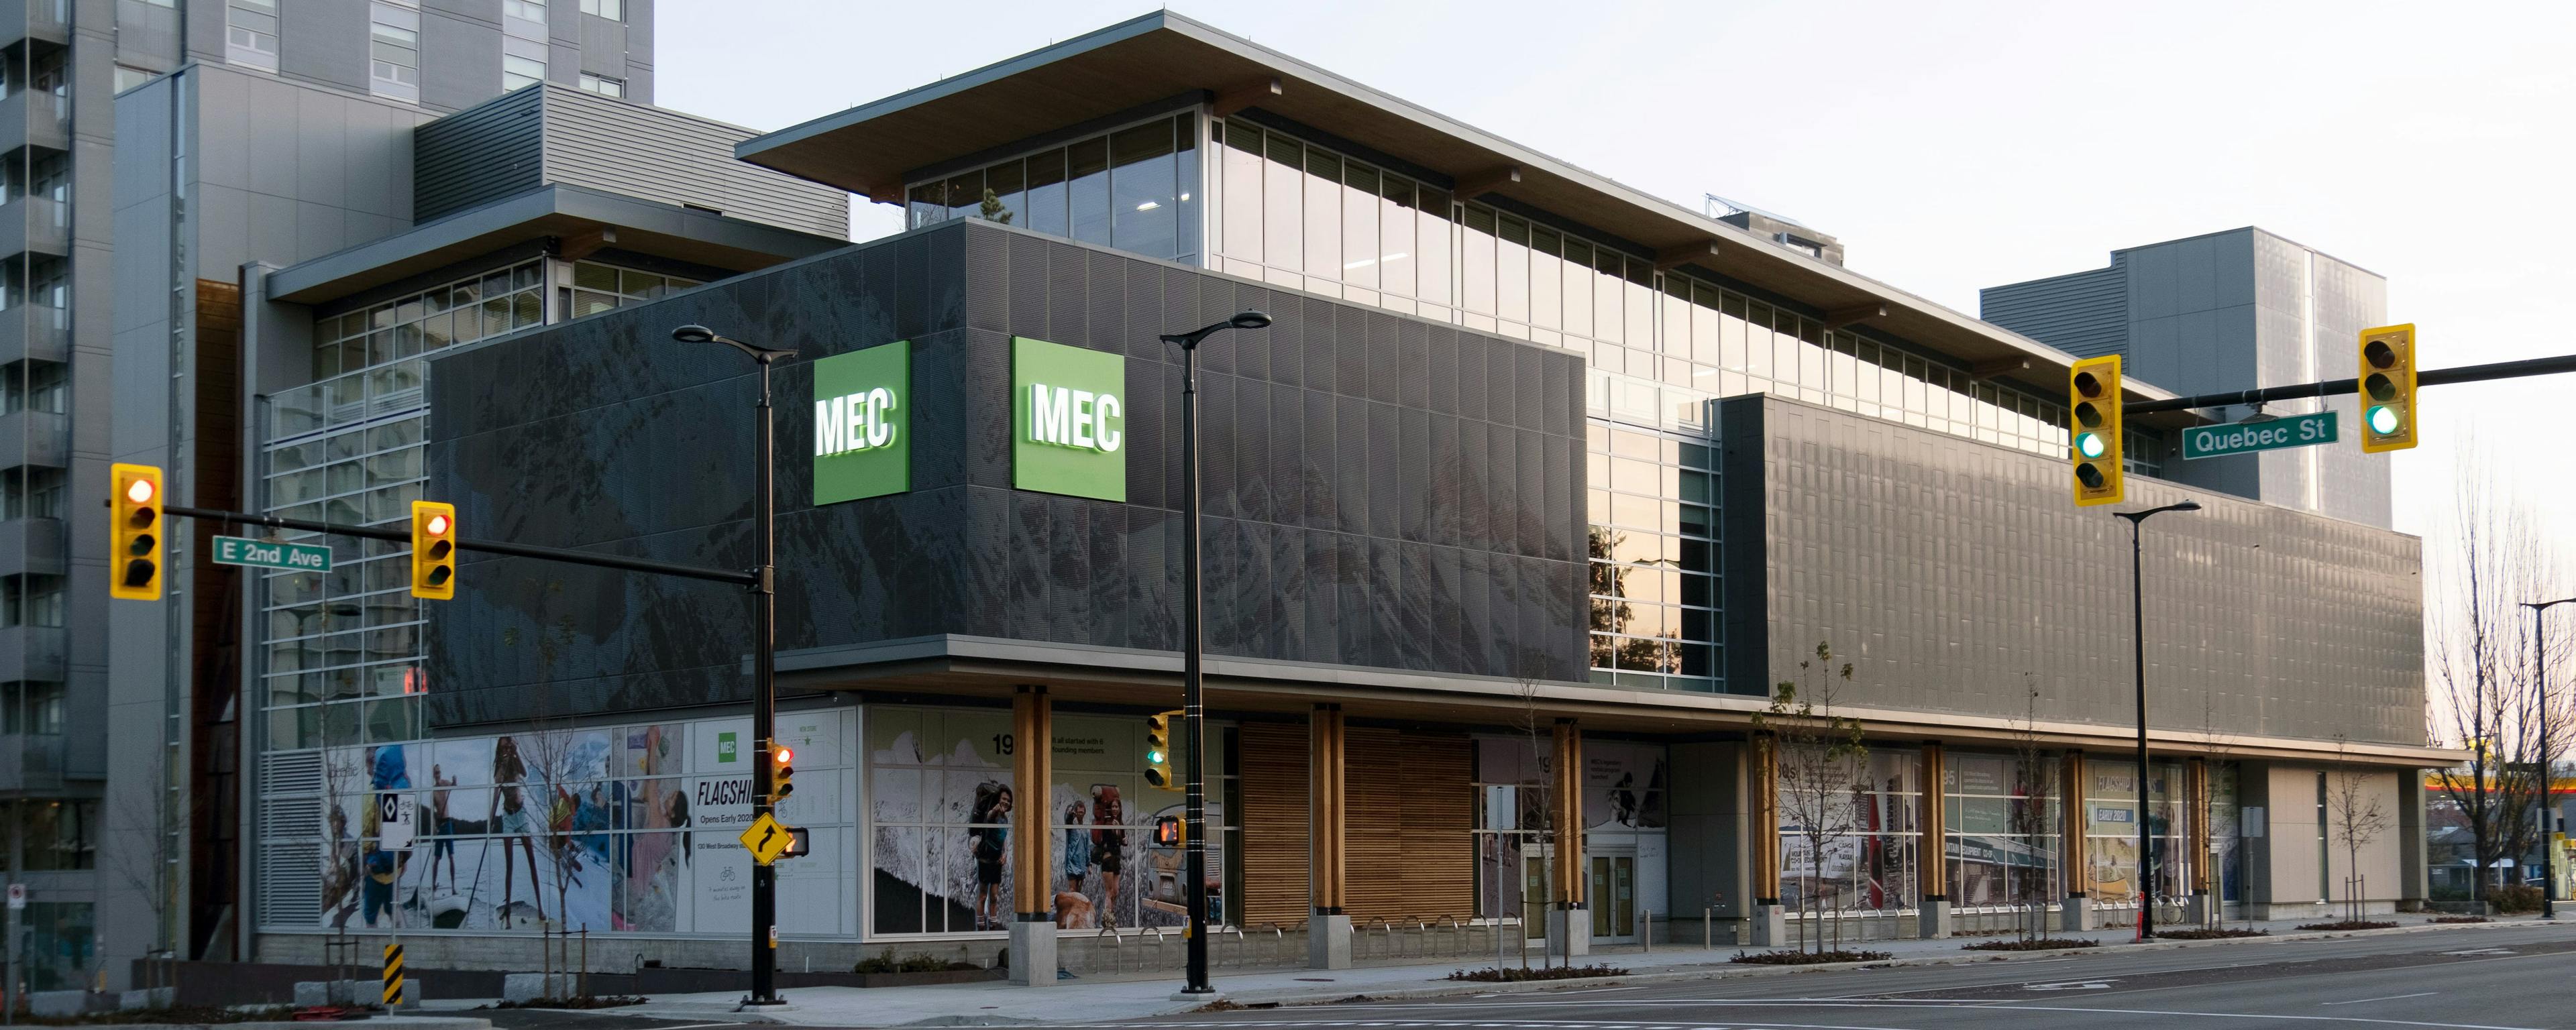 Sneak peek of the new MEC Vancouver flagship store